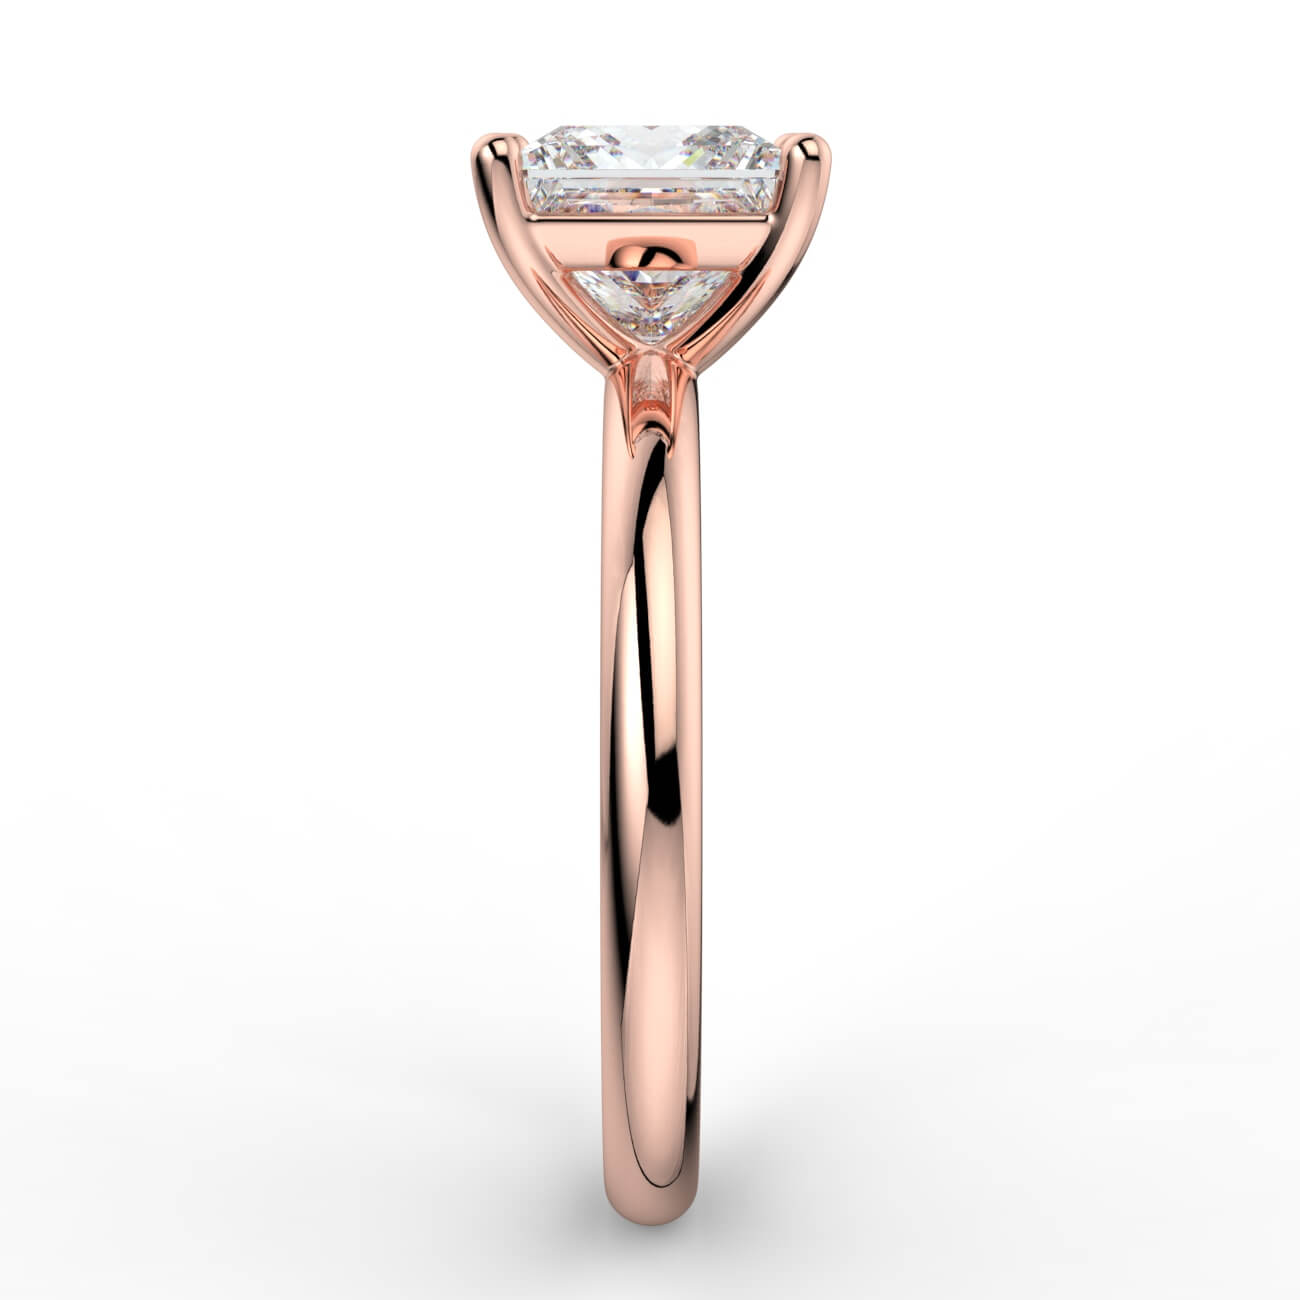 Solitaire princess cut diamond engagement ring in rose gold – Australian Diamond Network